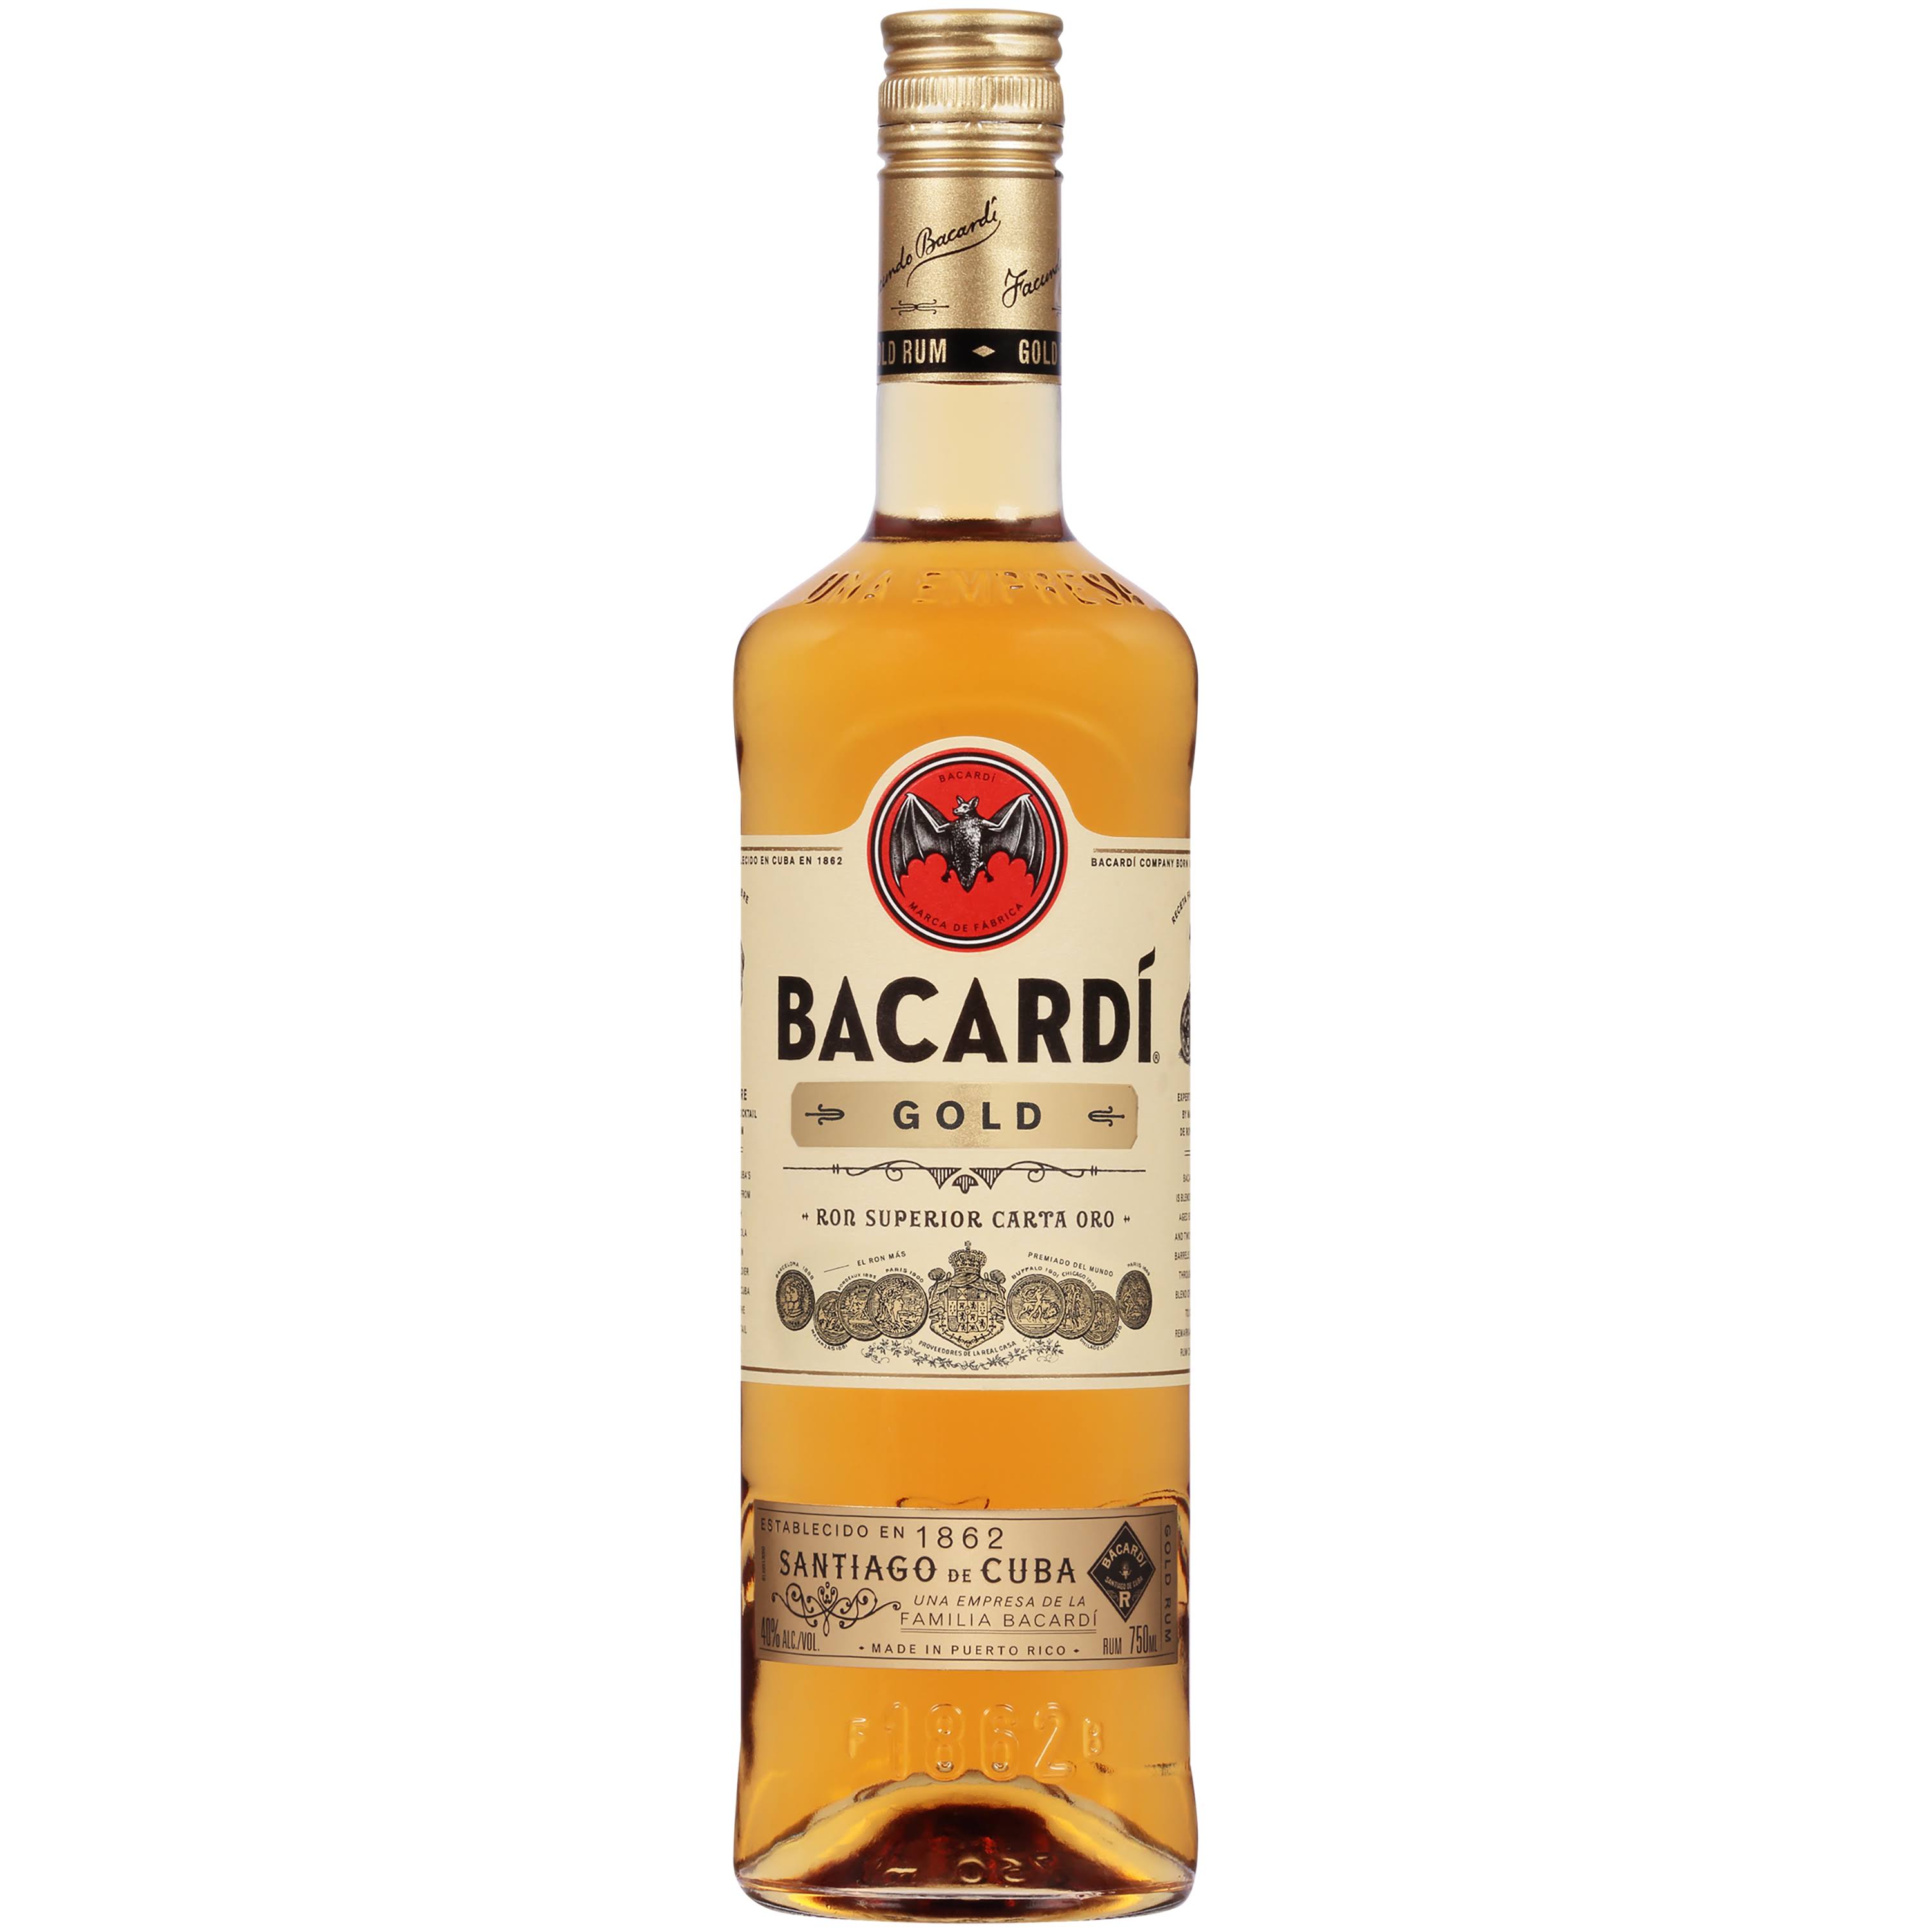 Bacardi Gold Rum 1140 mL bottle